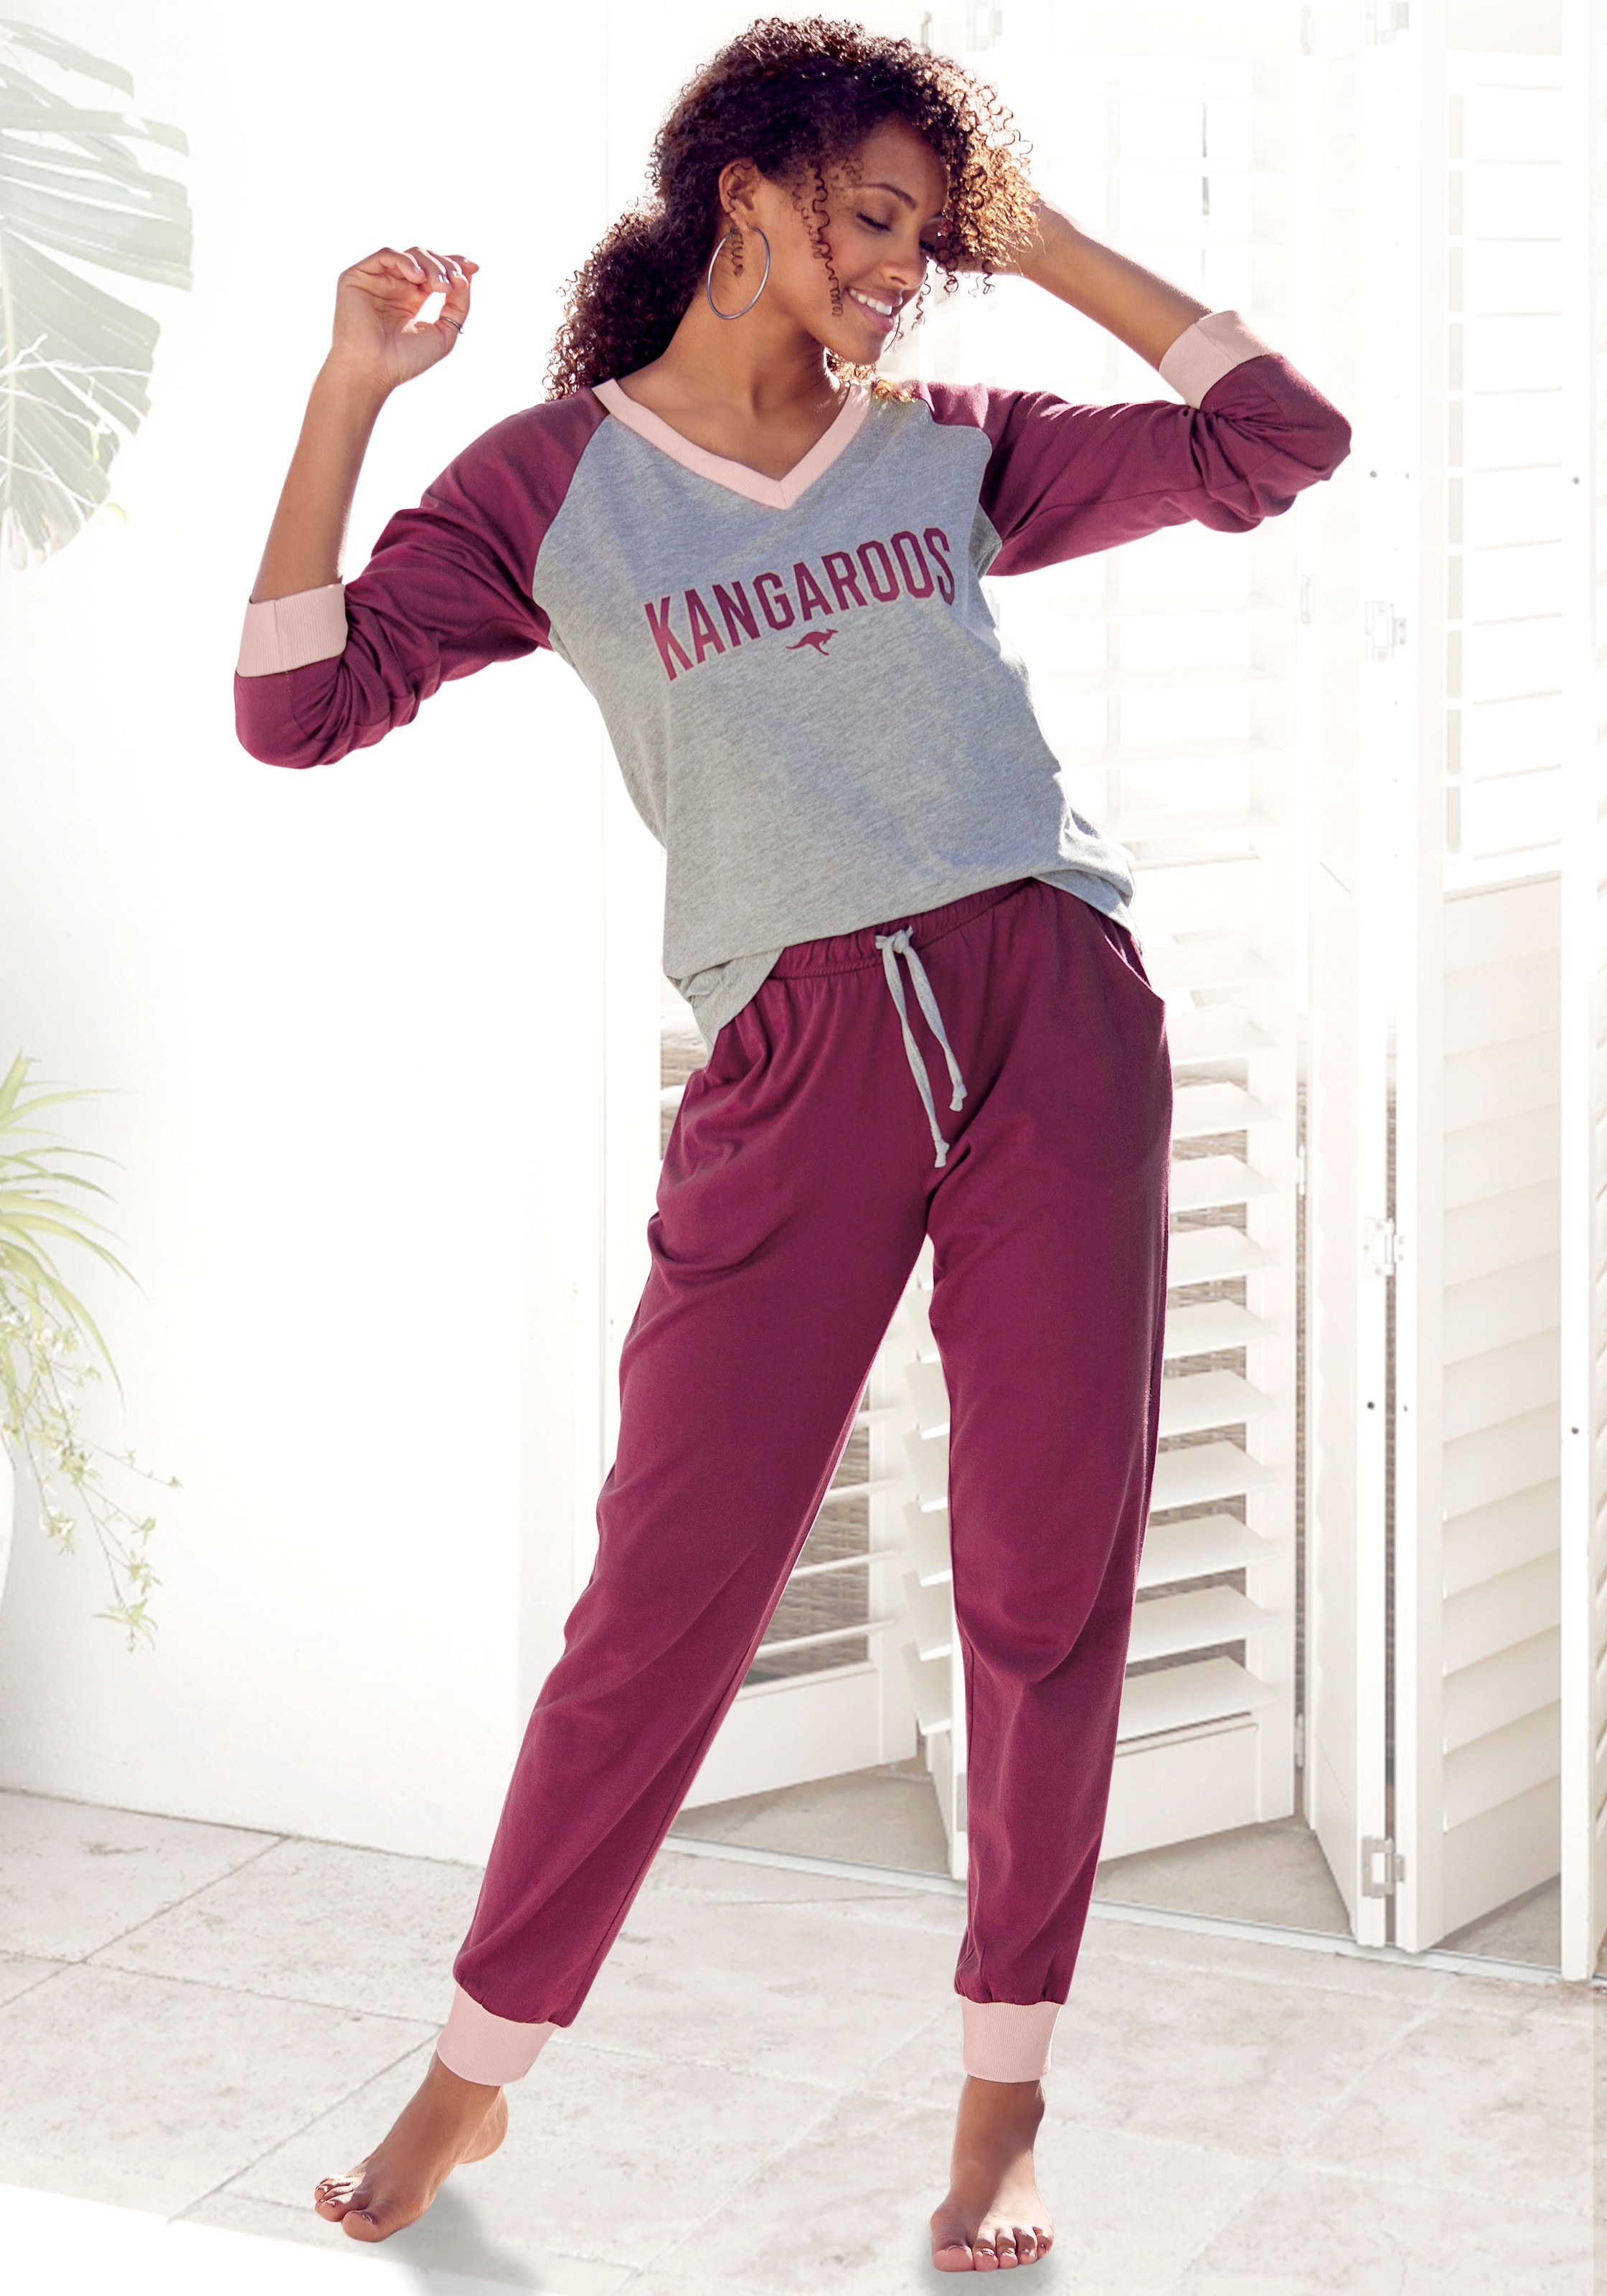 OTTO im Online Shop Pyjama, tlg., 1 Stück), mit kontrastfarbenen KangaROOS (2 Raglanärmeln